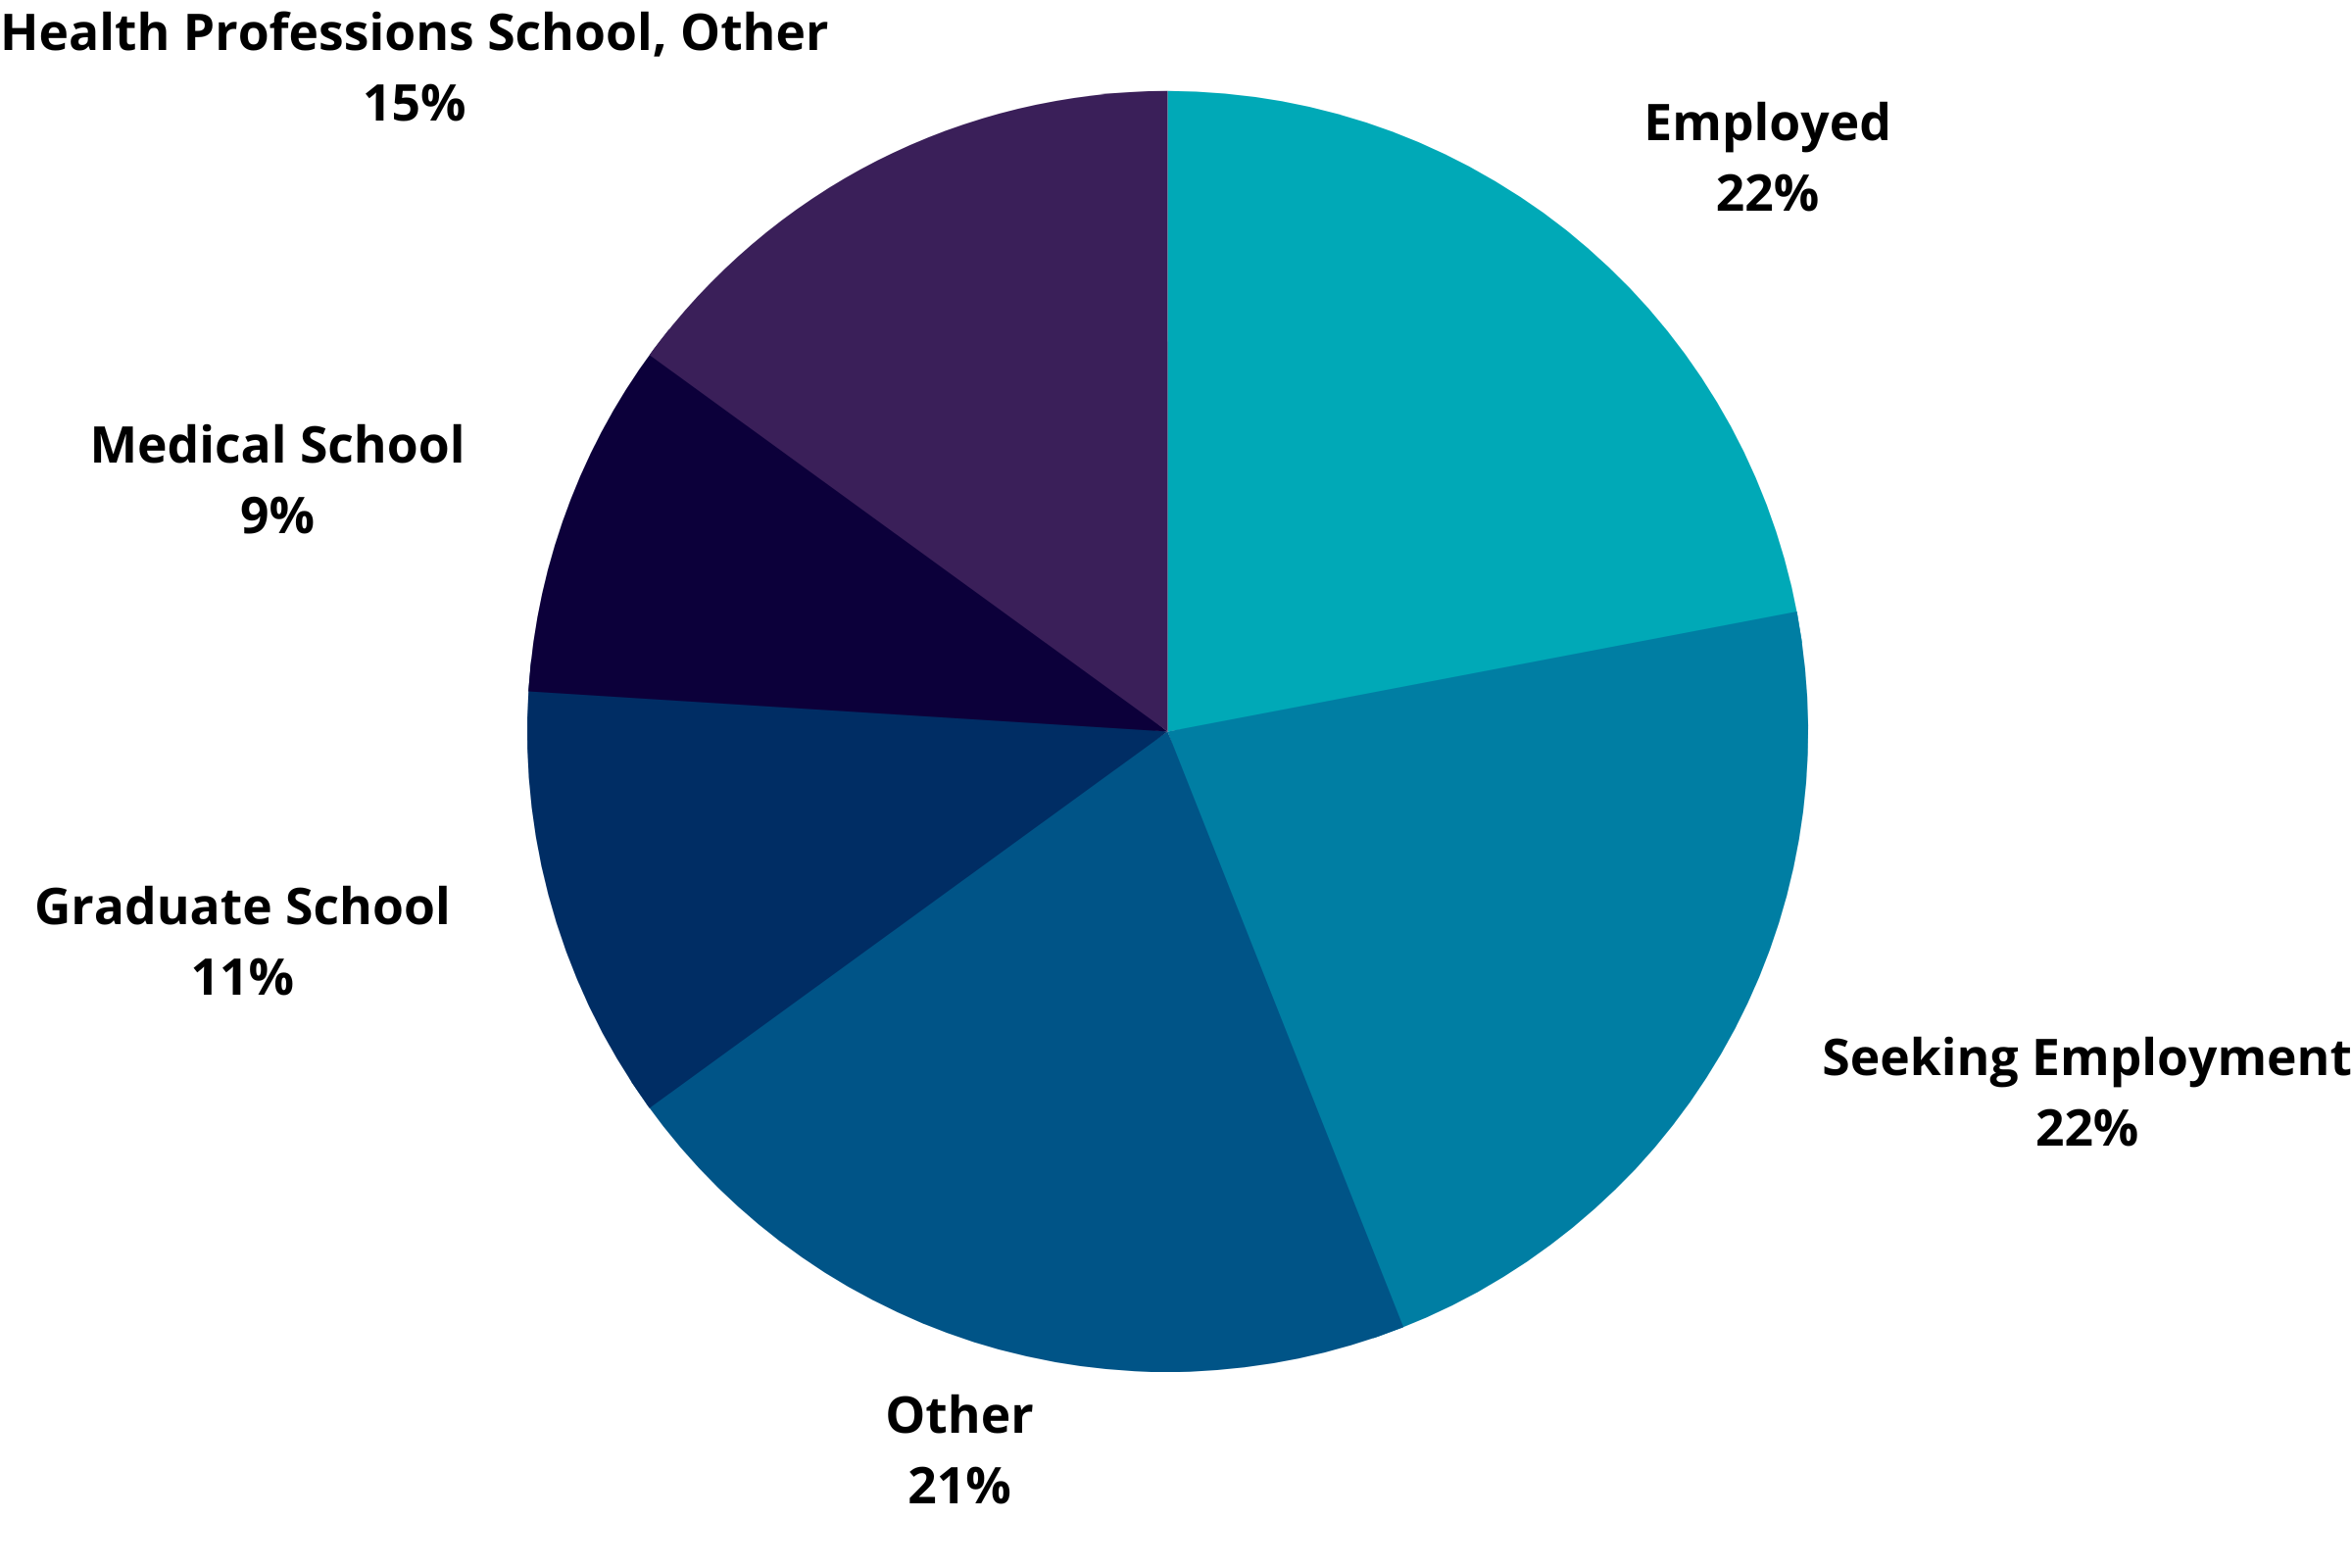 Nutrition Graduation Outcomes: Employed 22%, Seeking Employment 22%, Graduate School 11%, Medical School 9%, Health Professions School 15%, Other 21%